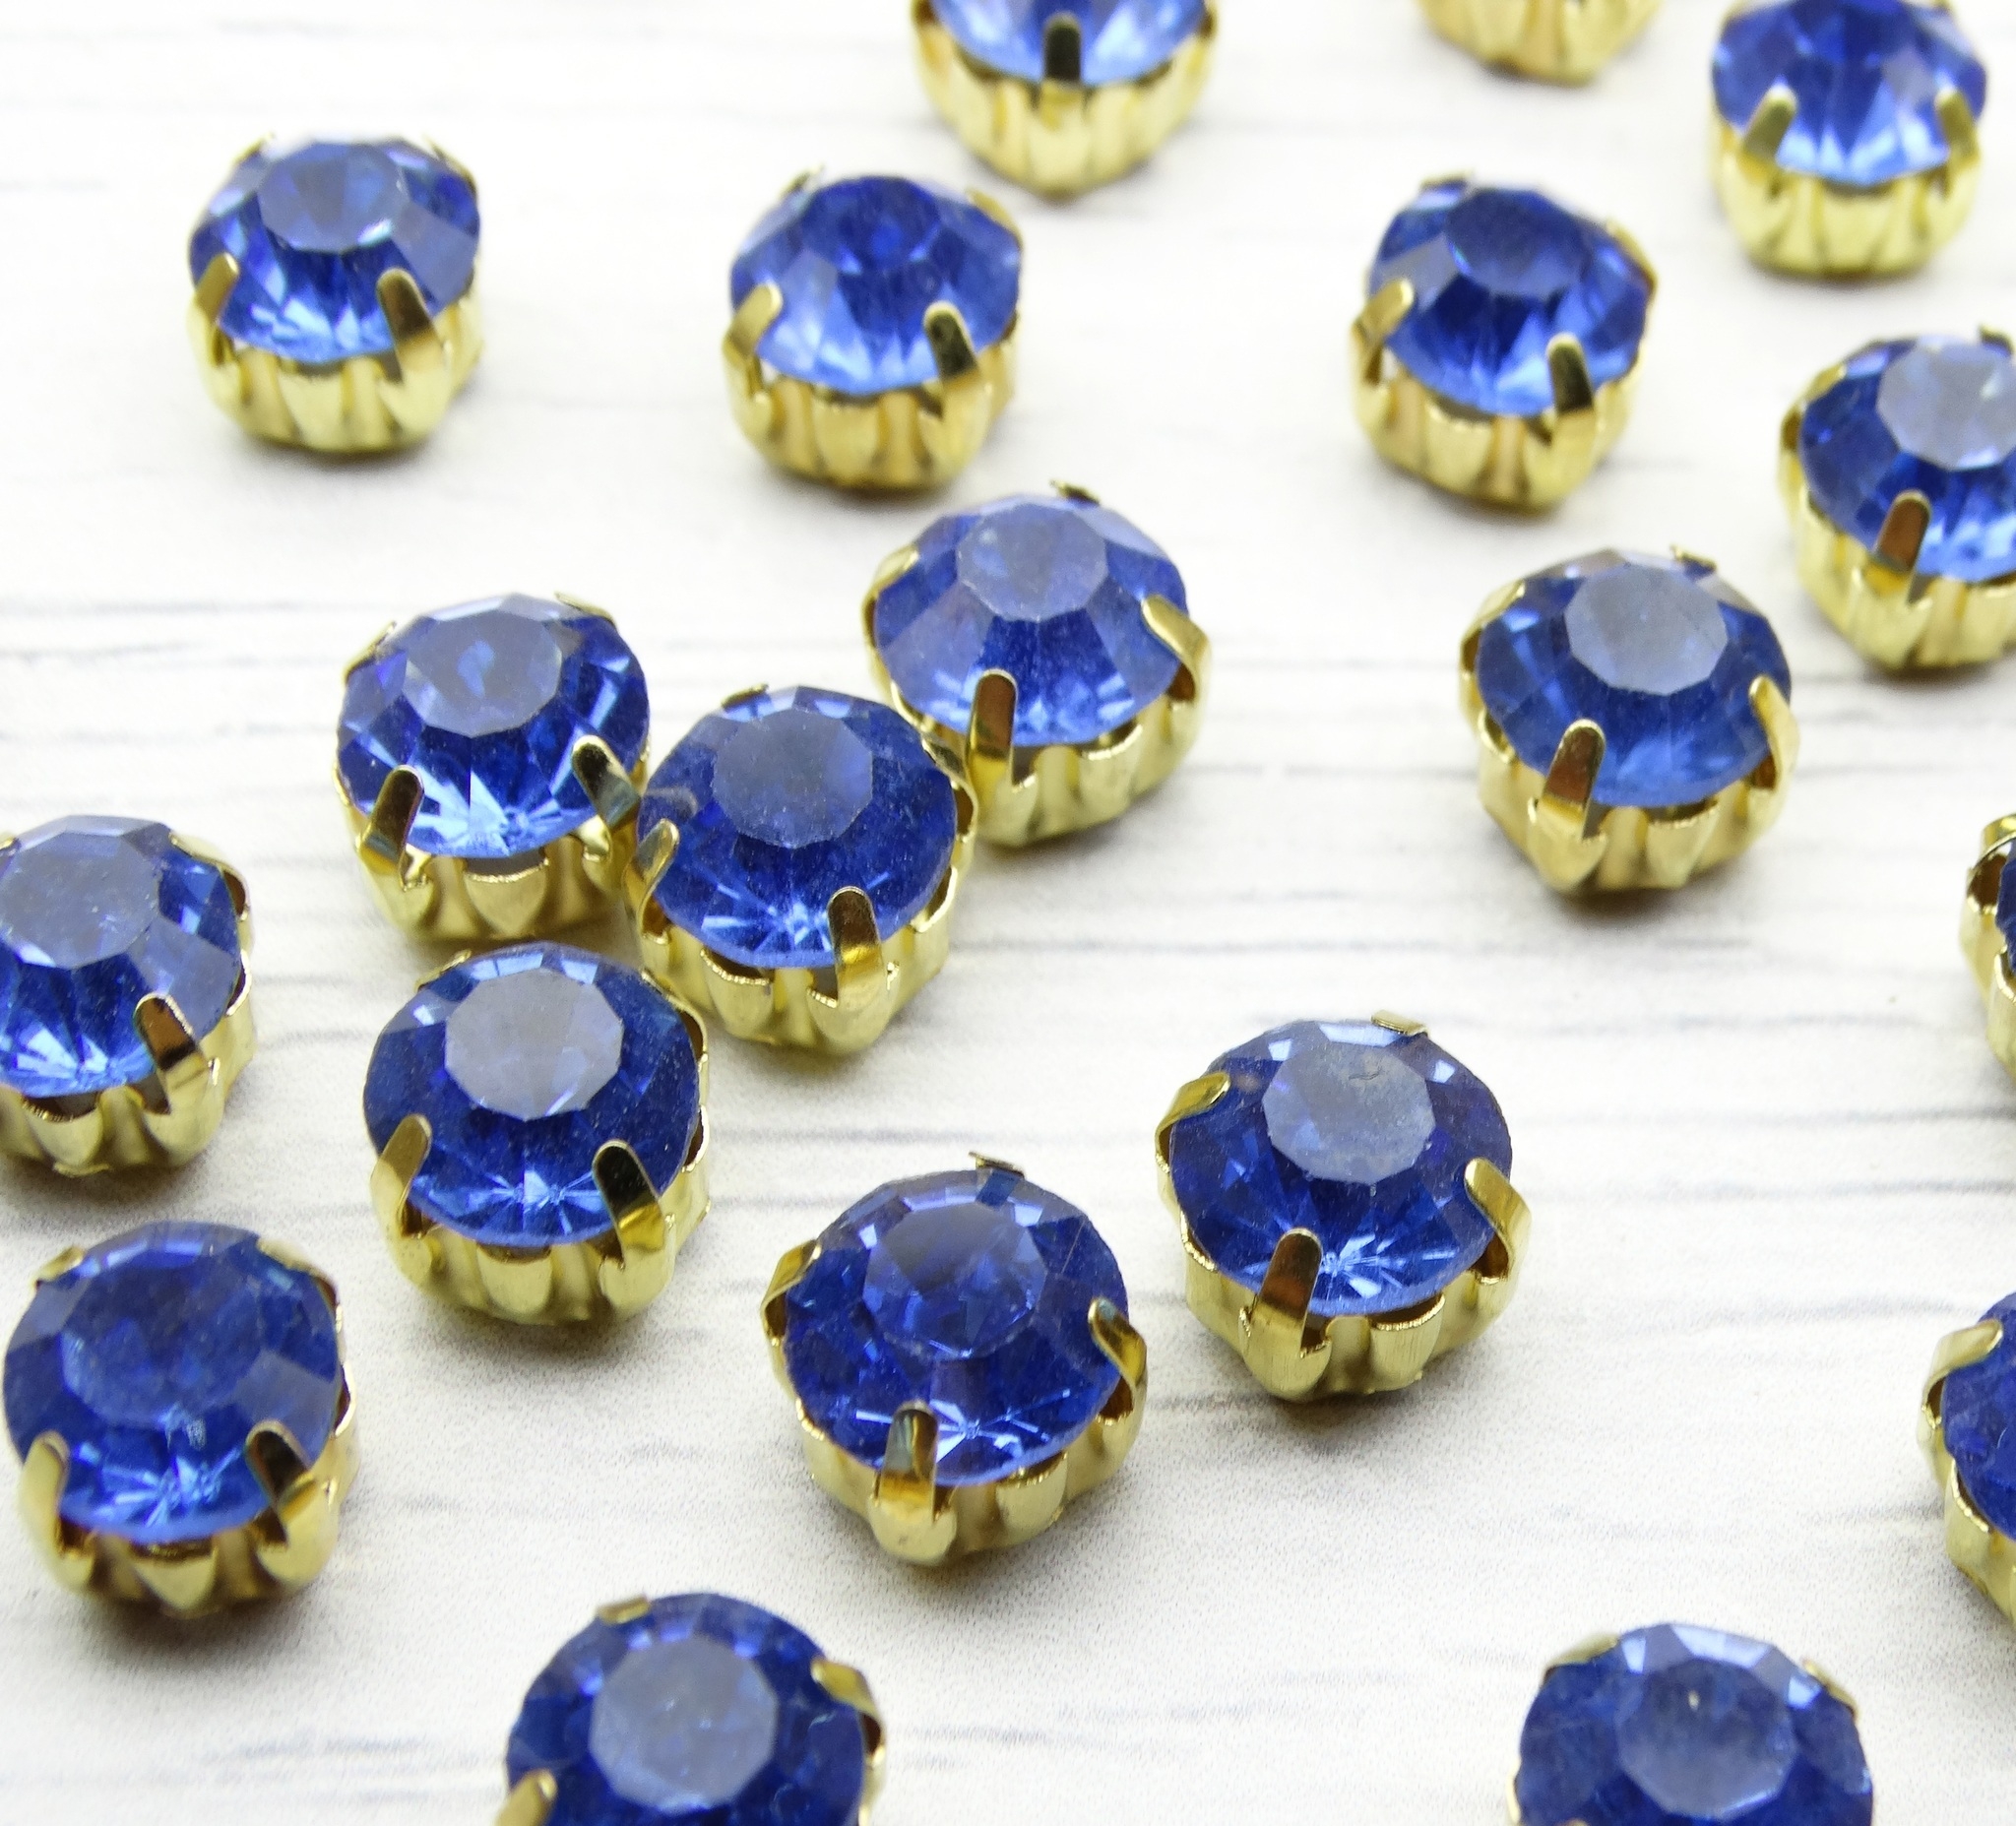 ЗЦ006НН88 Хрустальные стразы в цапах (шатоны), цвет: св.голубой (золото), размер: 8х8 мм, 15 шт.